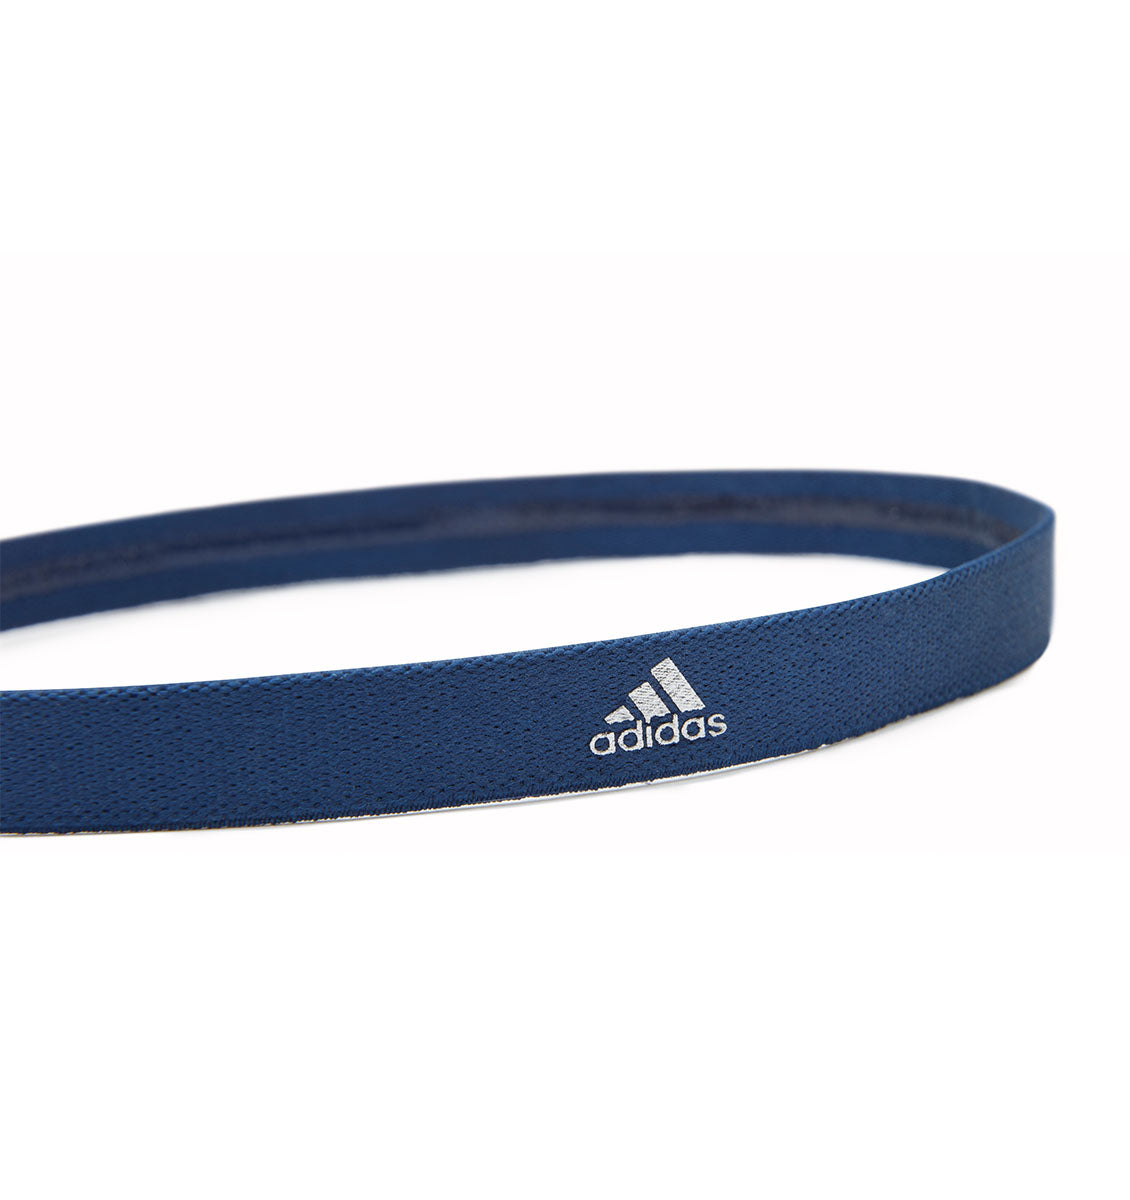 adidas Sports Hair Bands - Metallic Grey/Blue/Burgundy (3 Pack) - 4